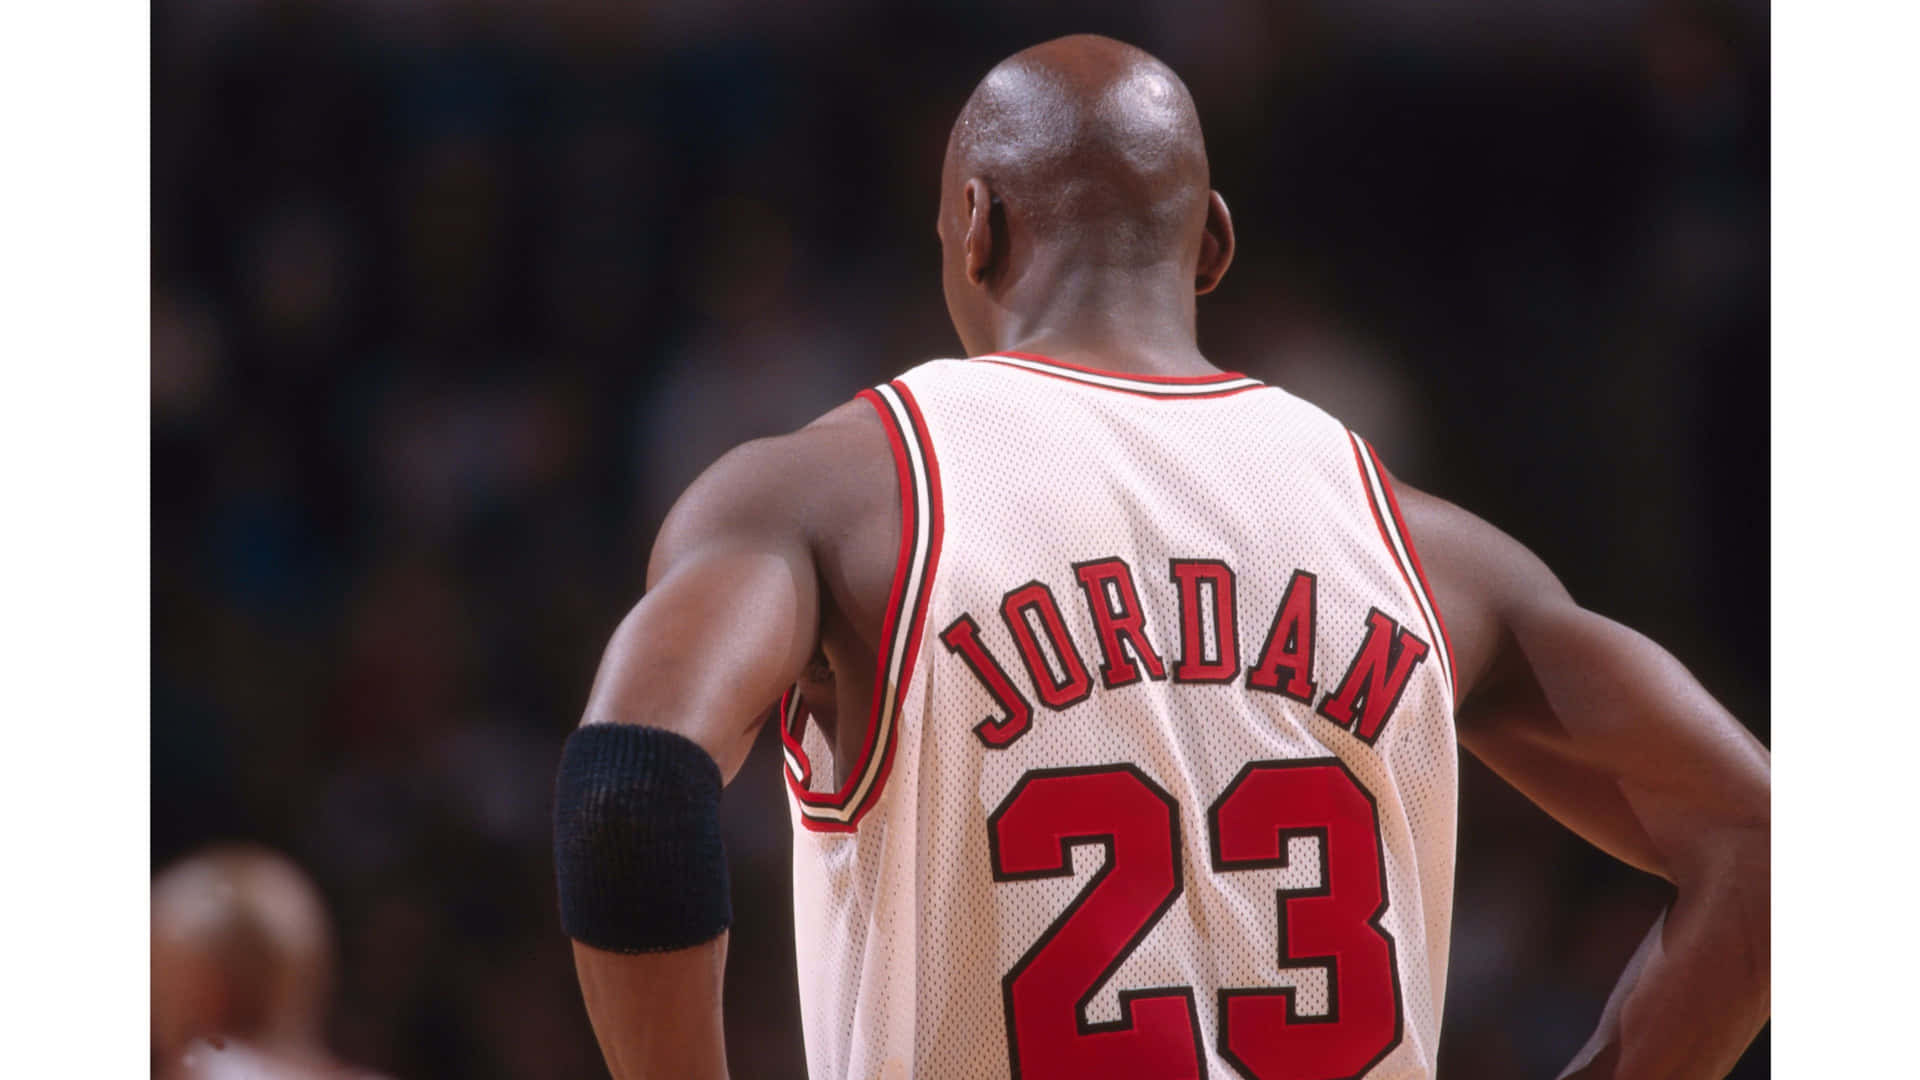 Download An iconic Michael Jordan jersey hangs off a basketball